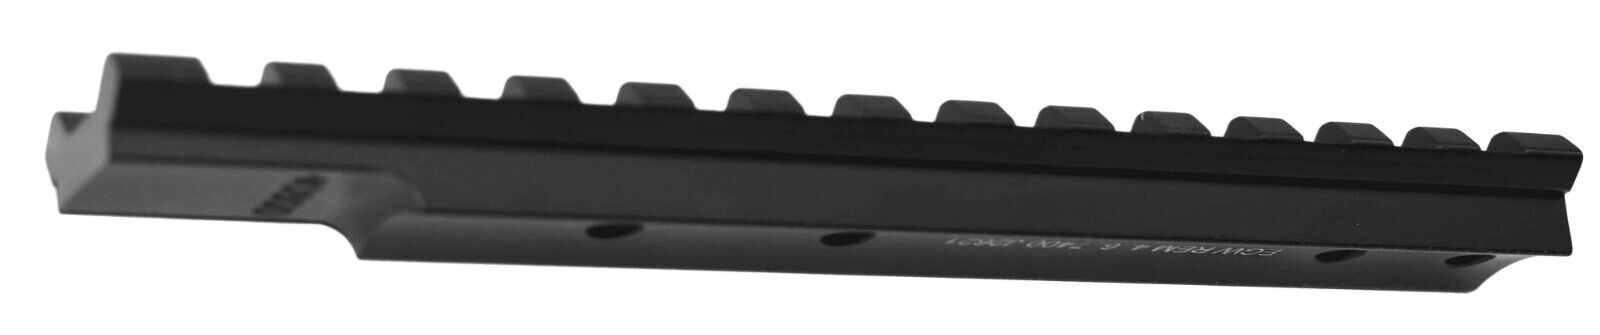 picatinny rail mount for winchester 1300 shotgun.